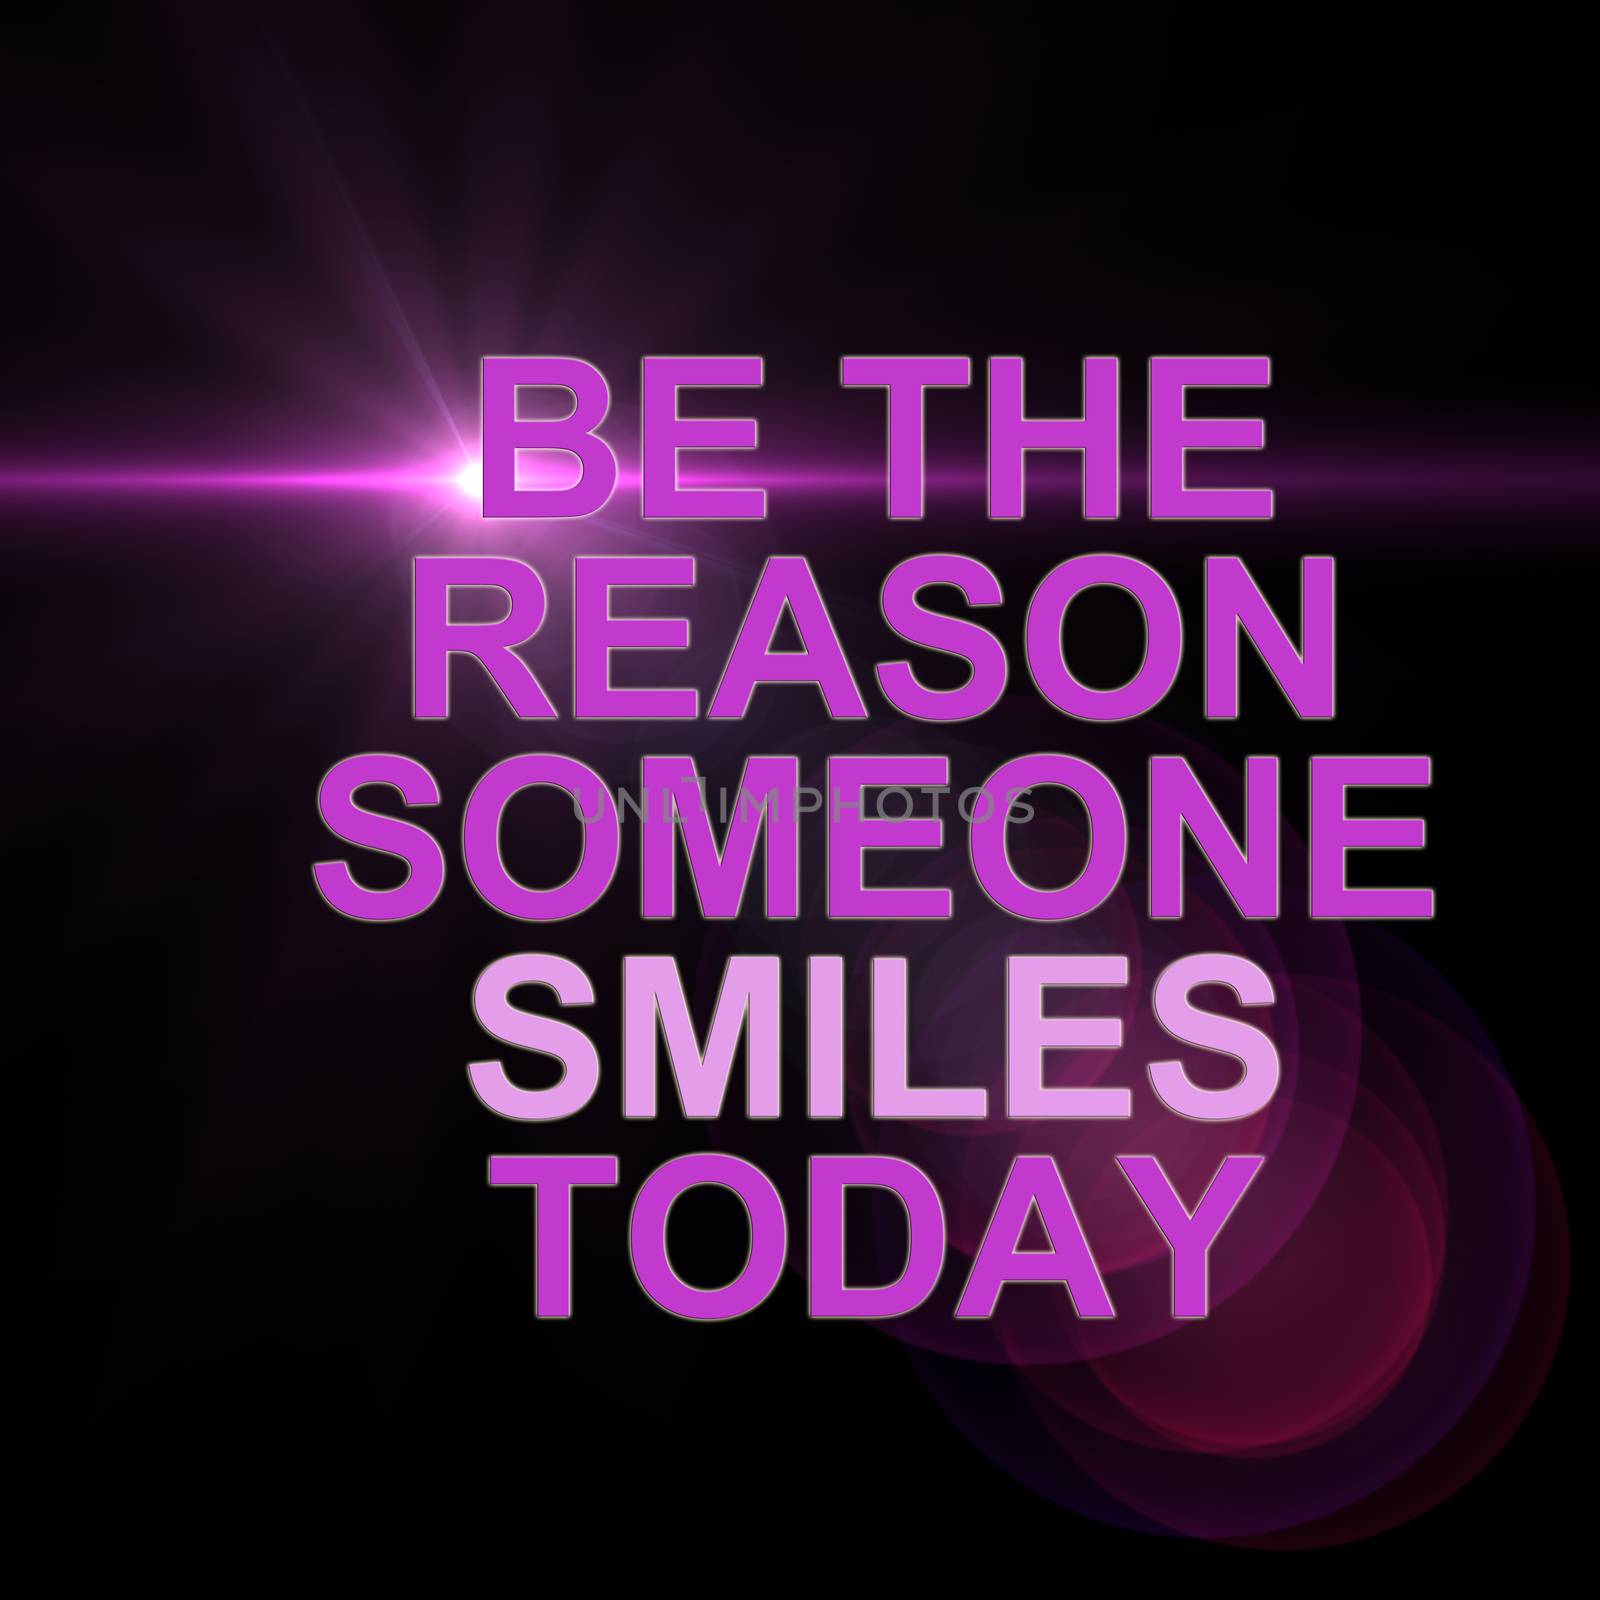 be the reason someone smiles today by vitanovski